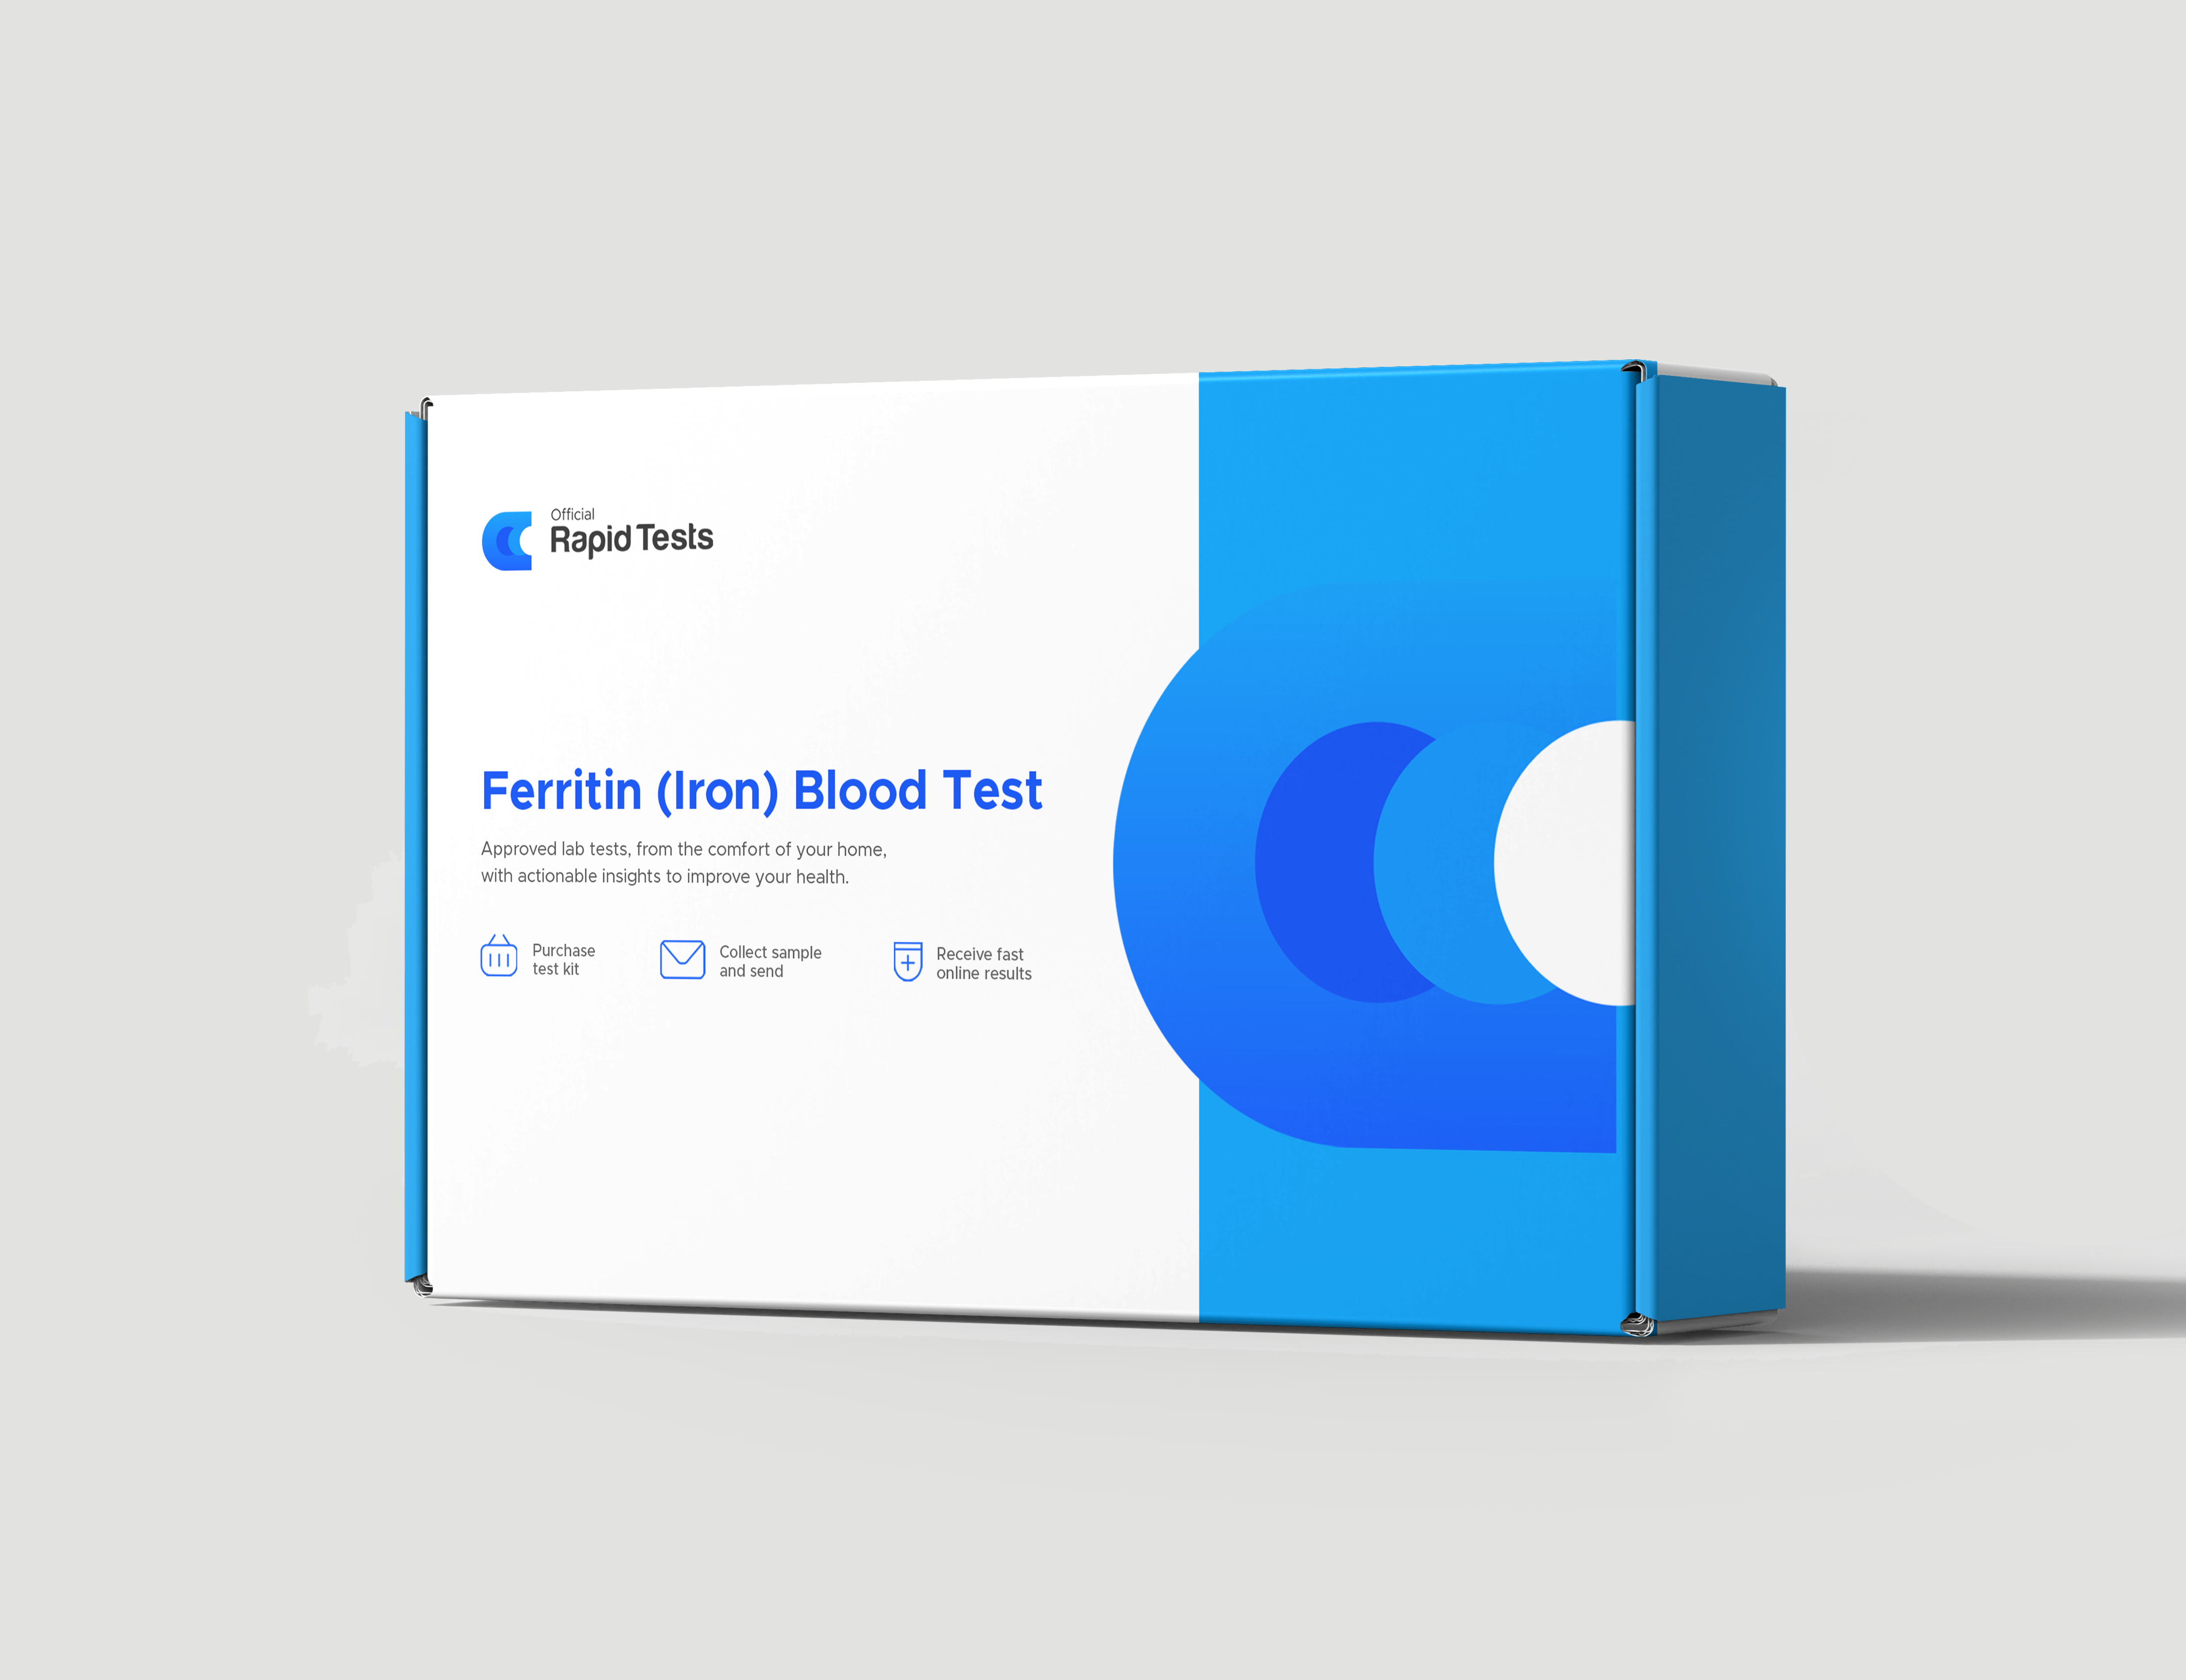 Ferritin (Iron) Blood Test